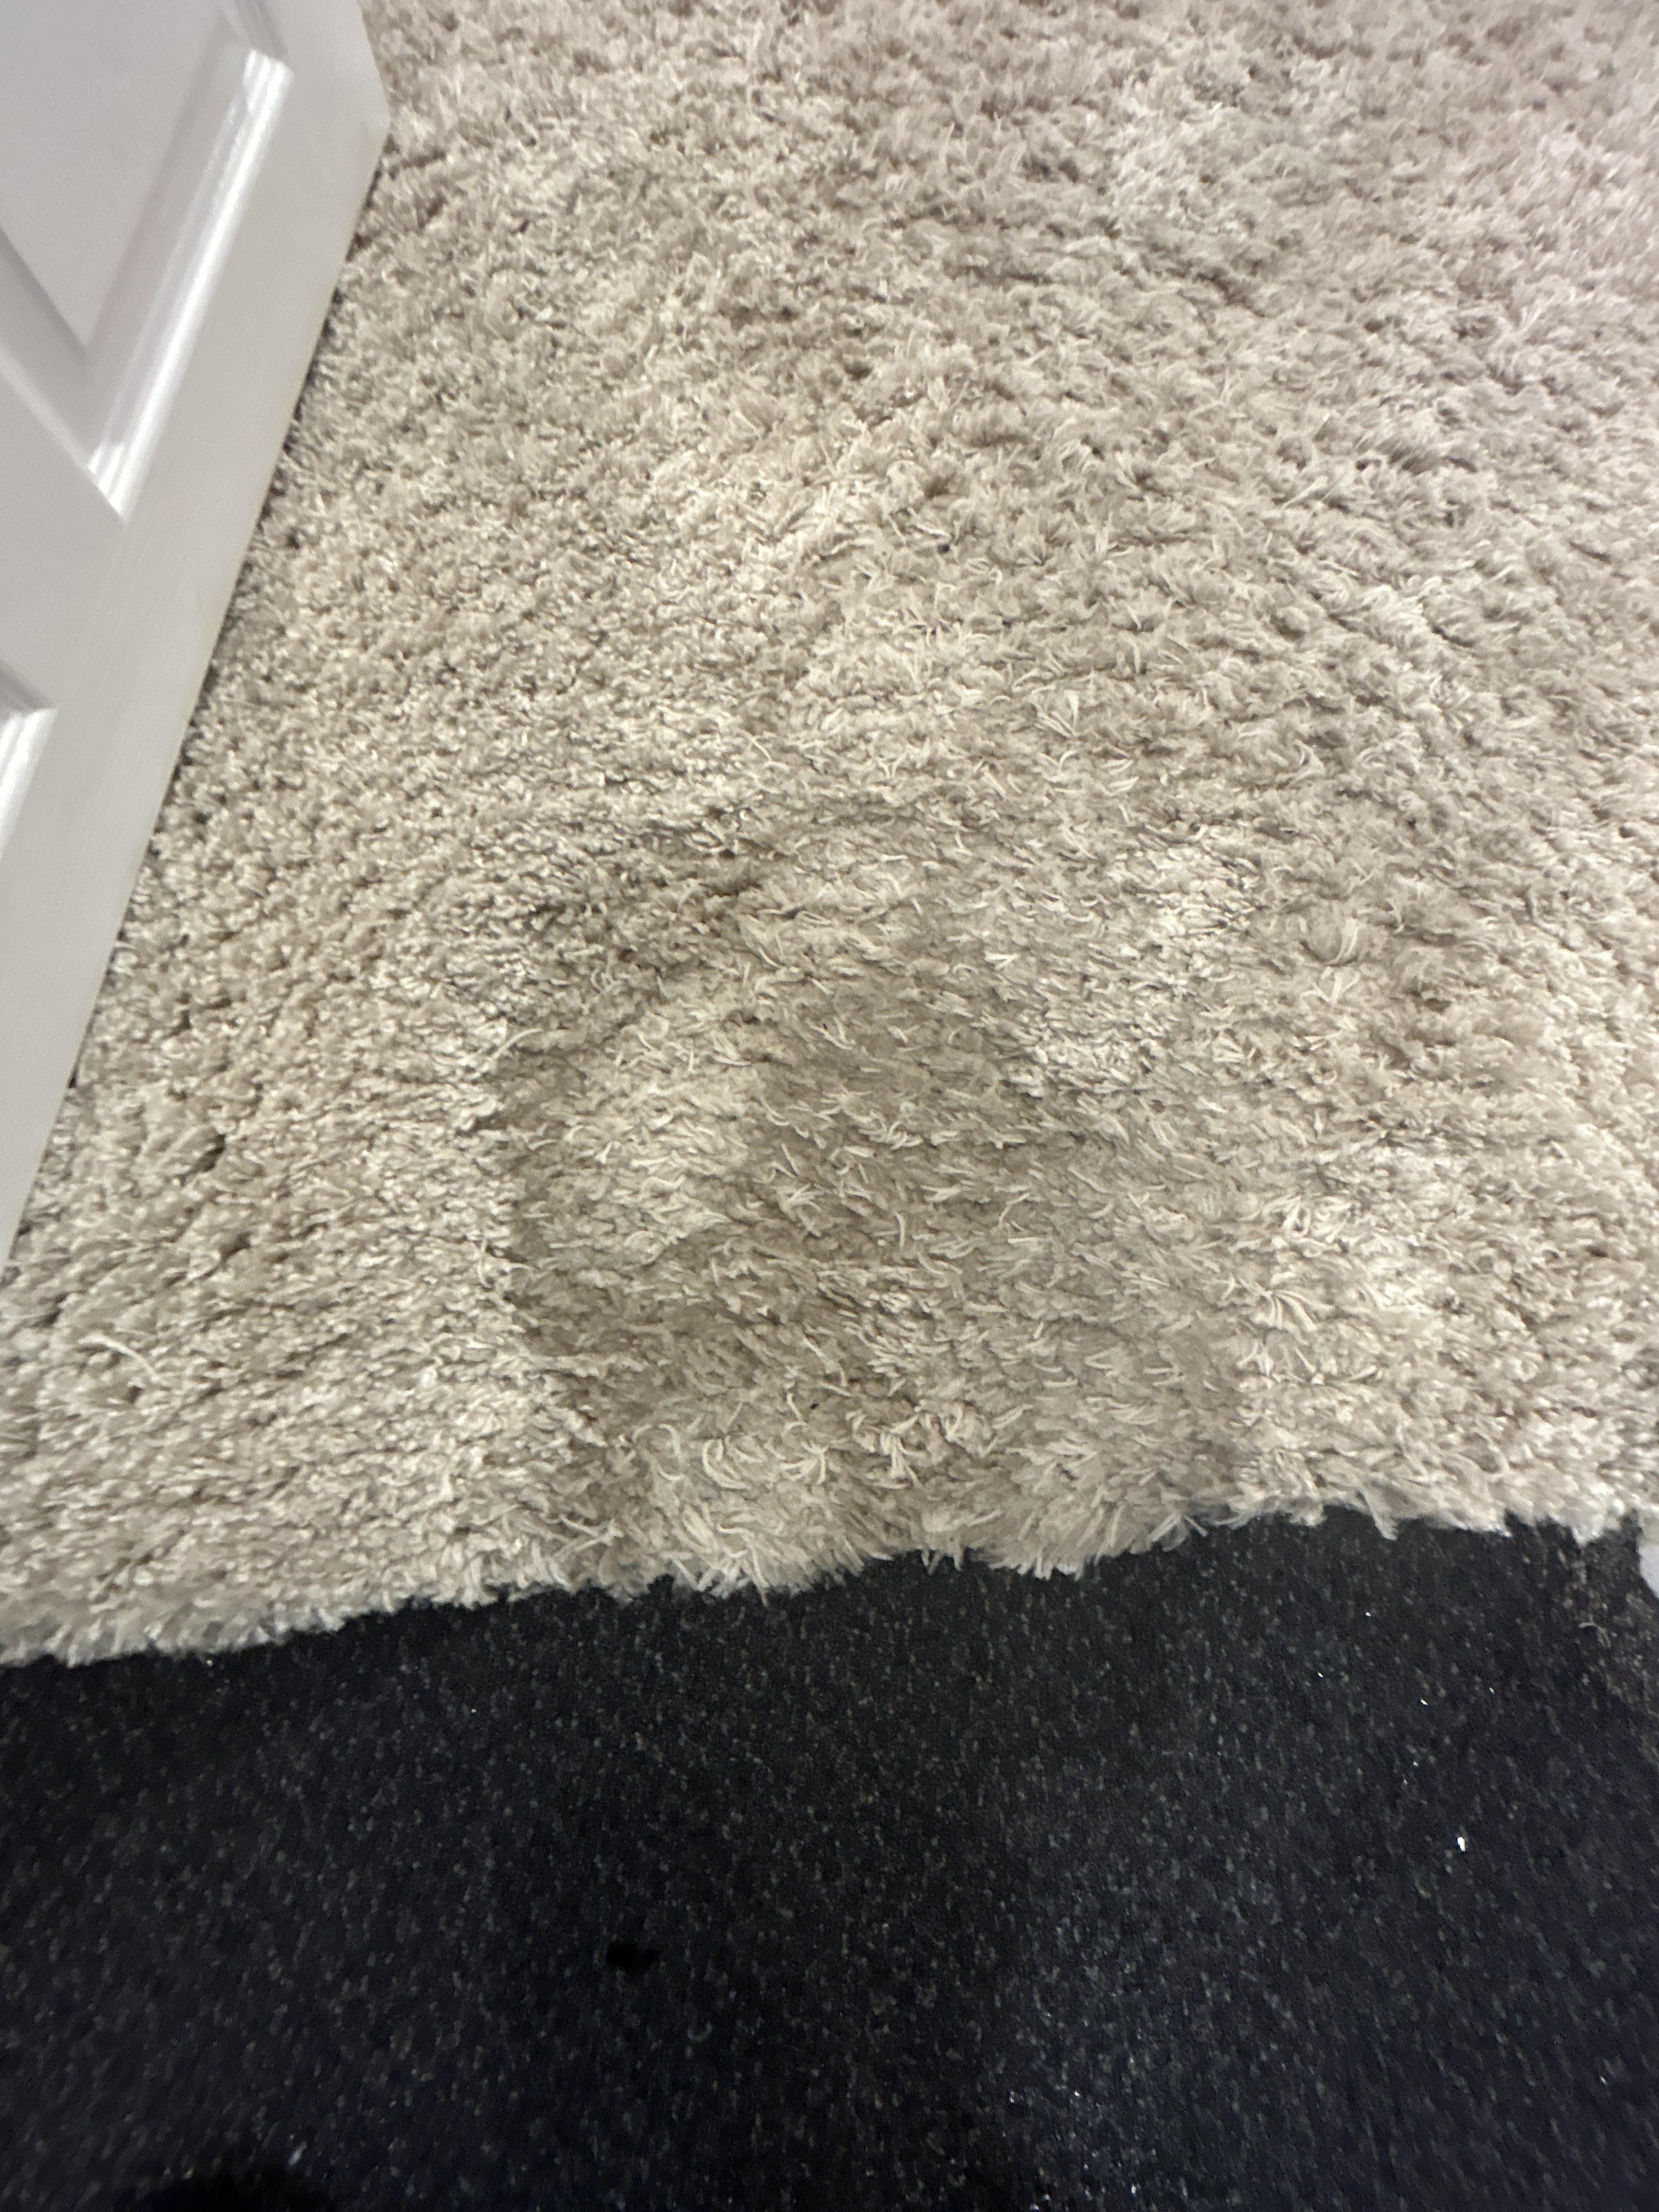 Wet Carpet in Basement